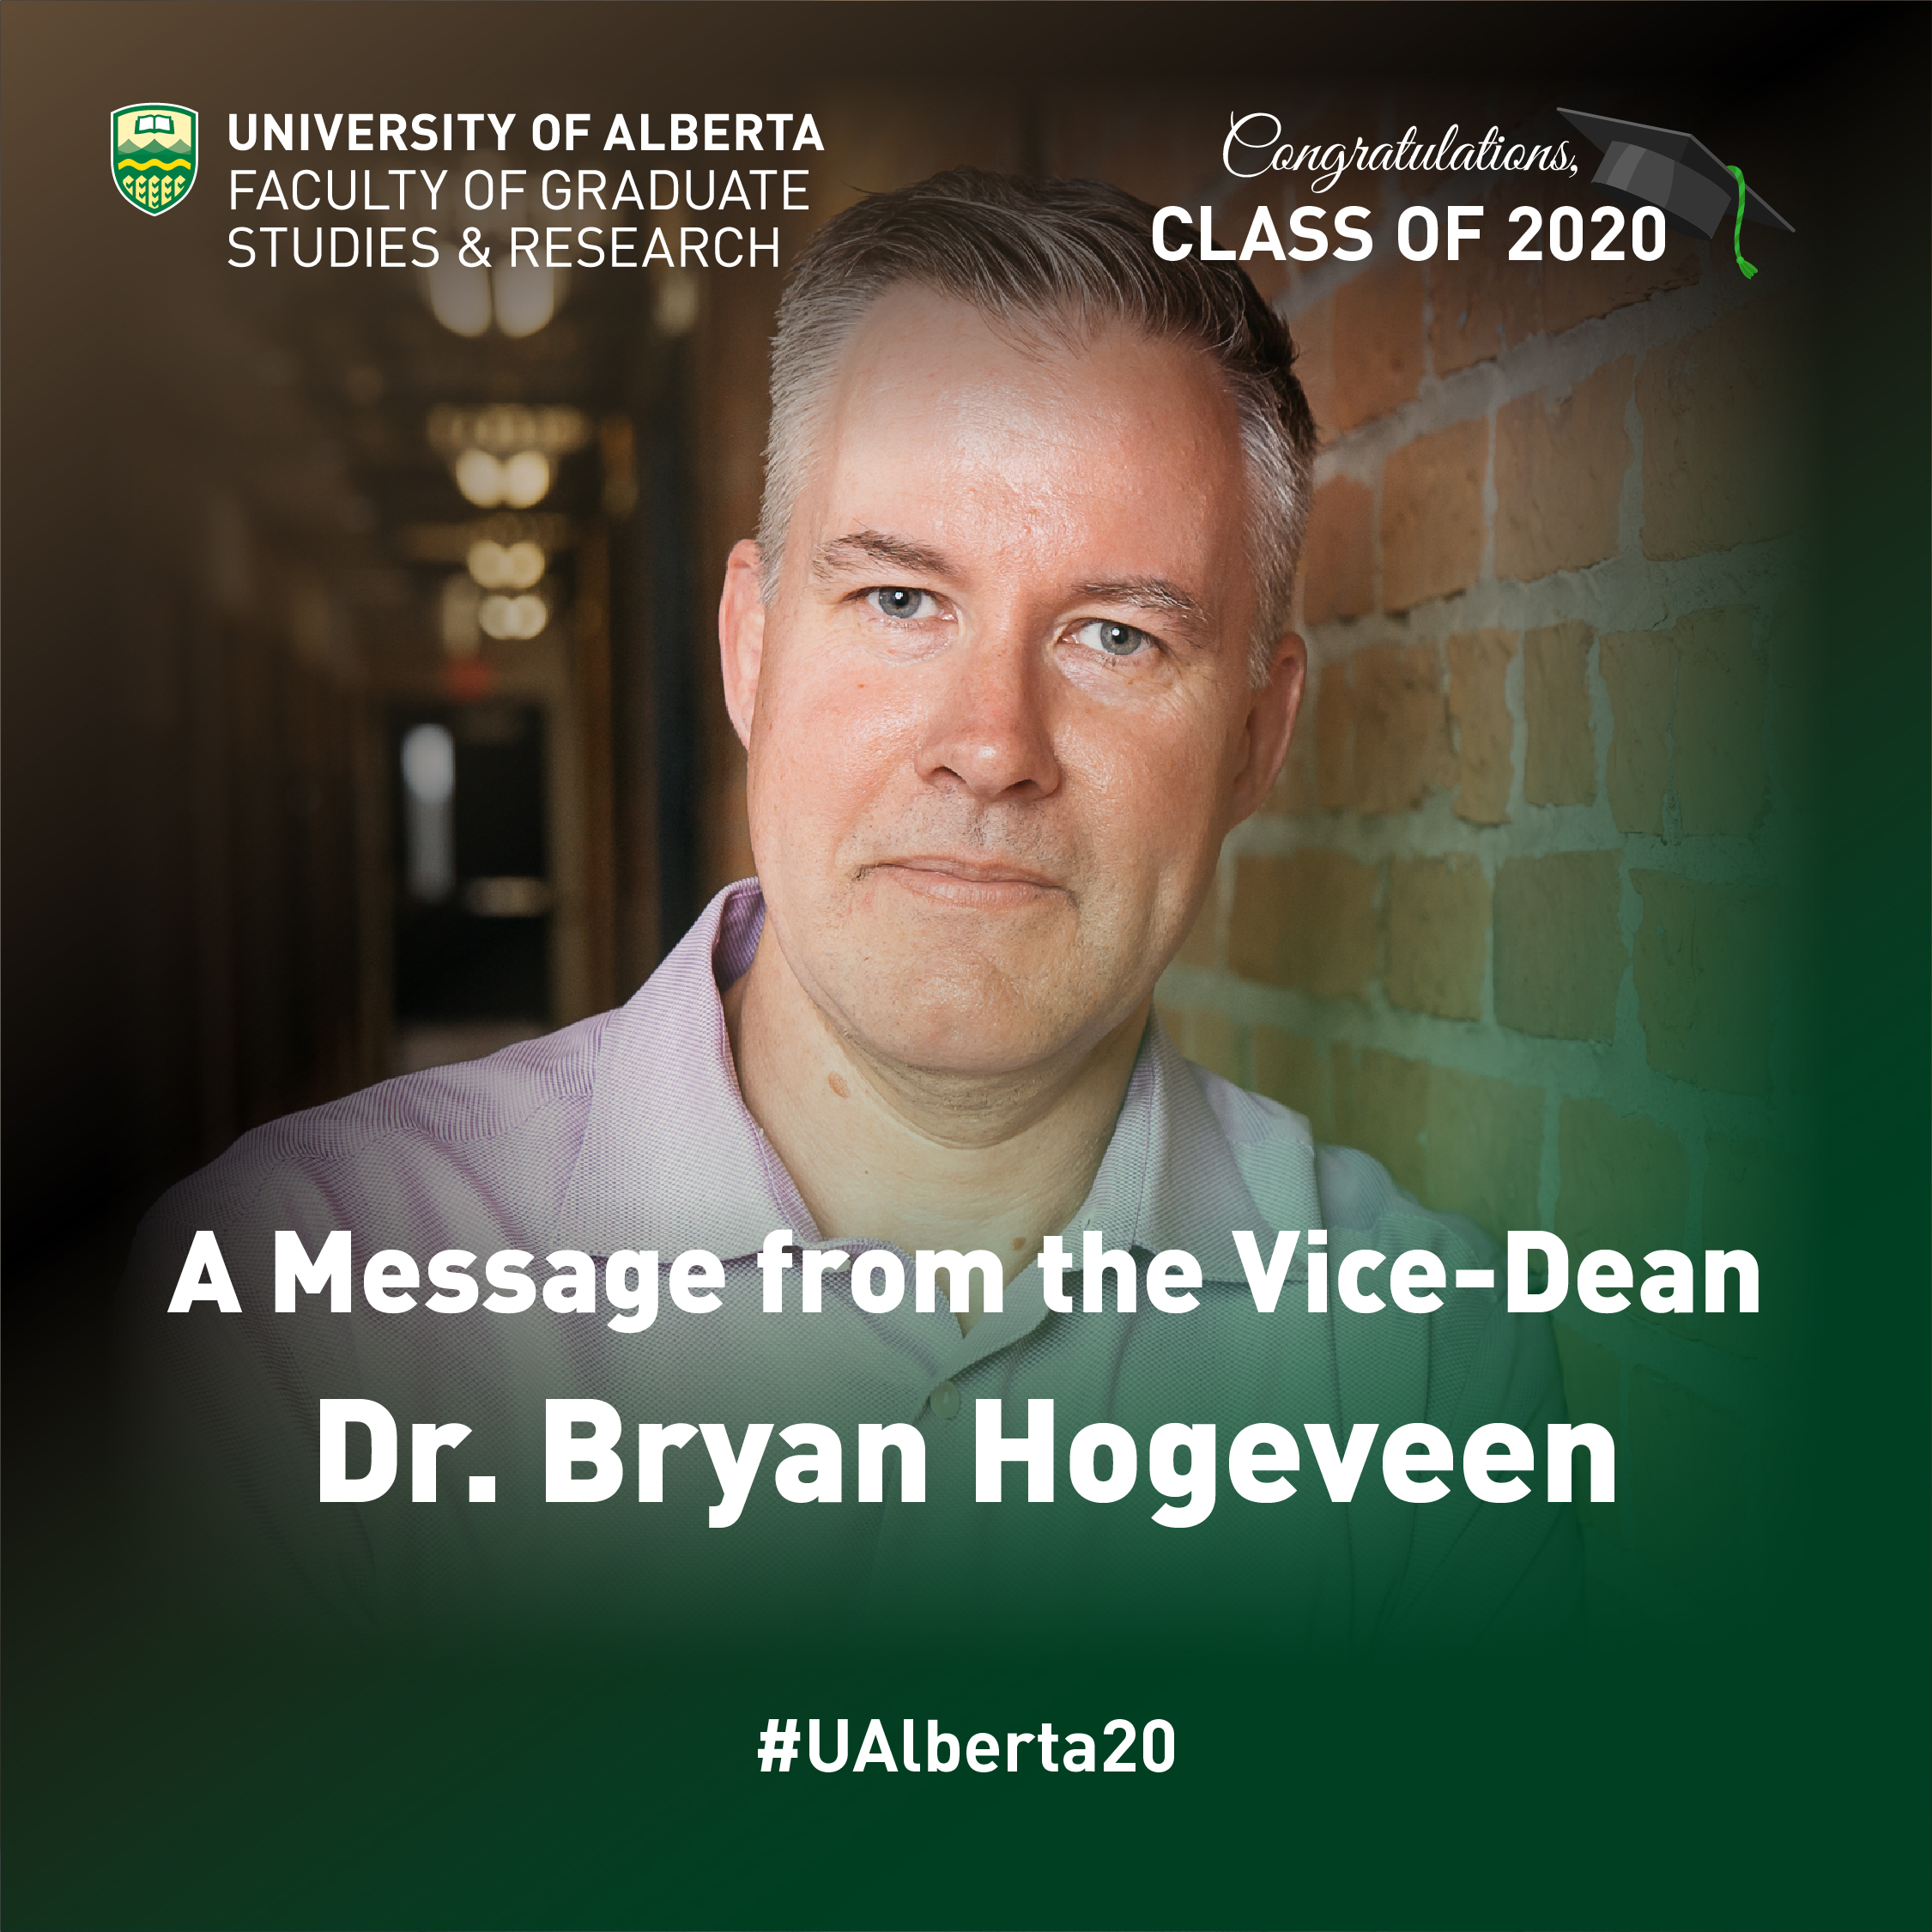 A Message from Dr. Bryan Hogeveen, FGSR Vice-Dean